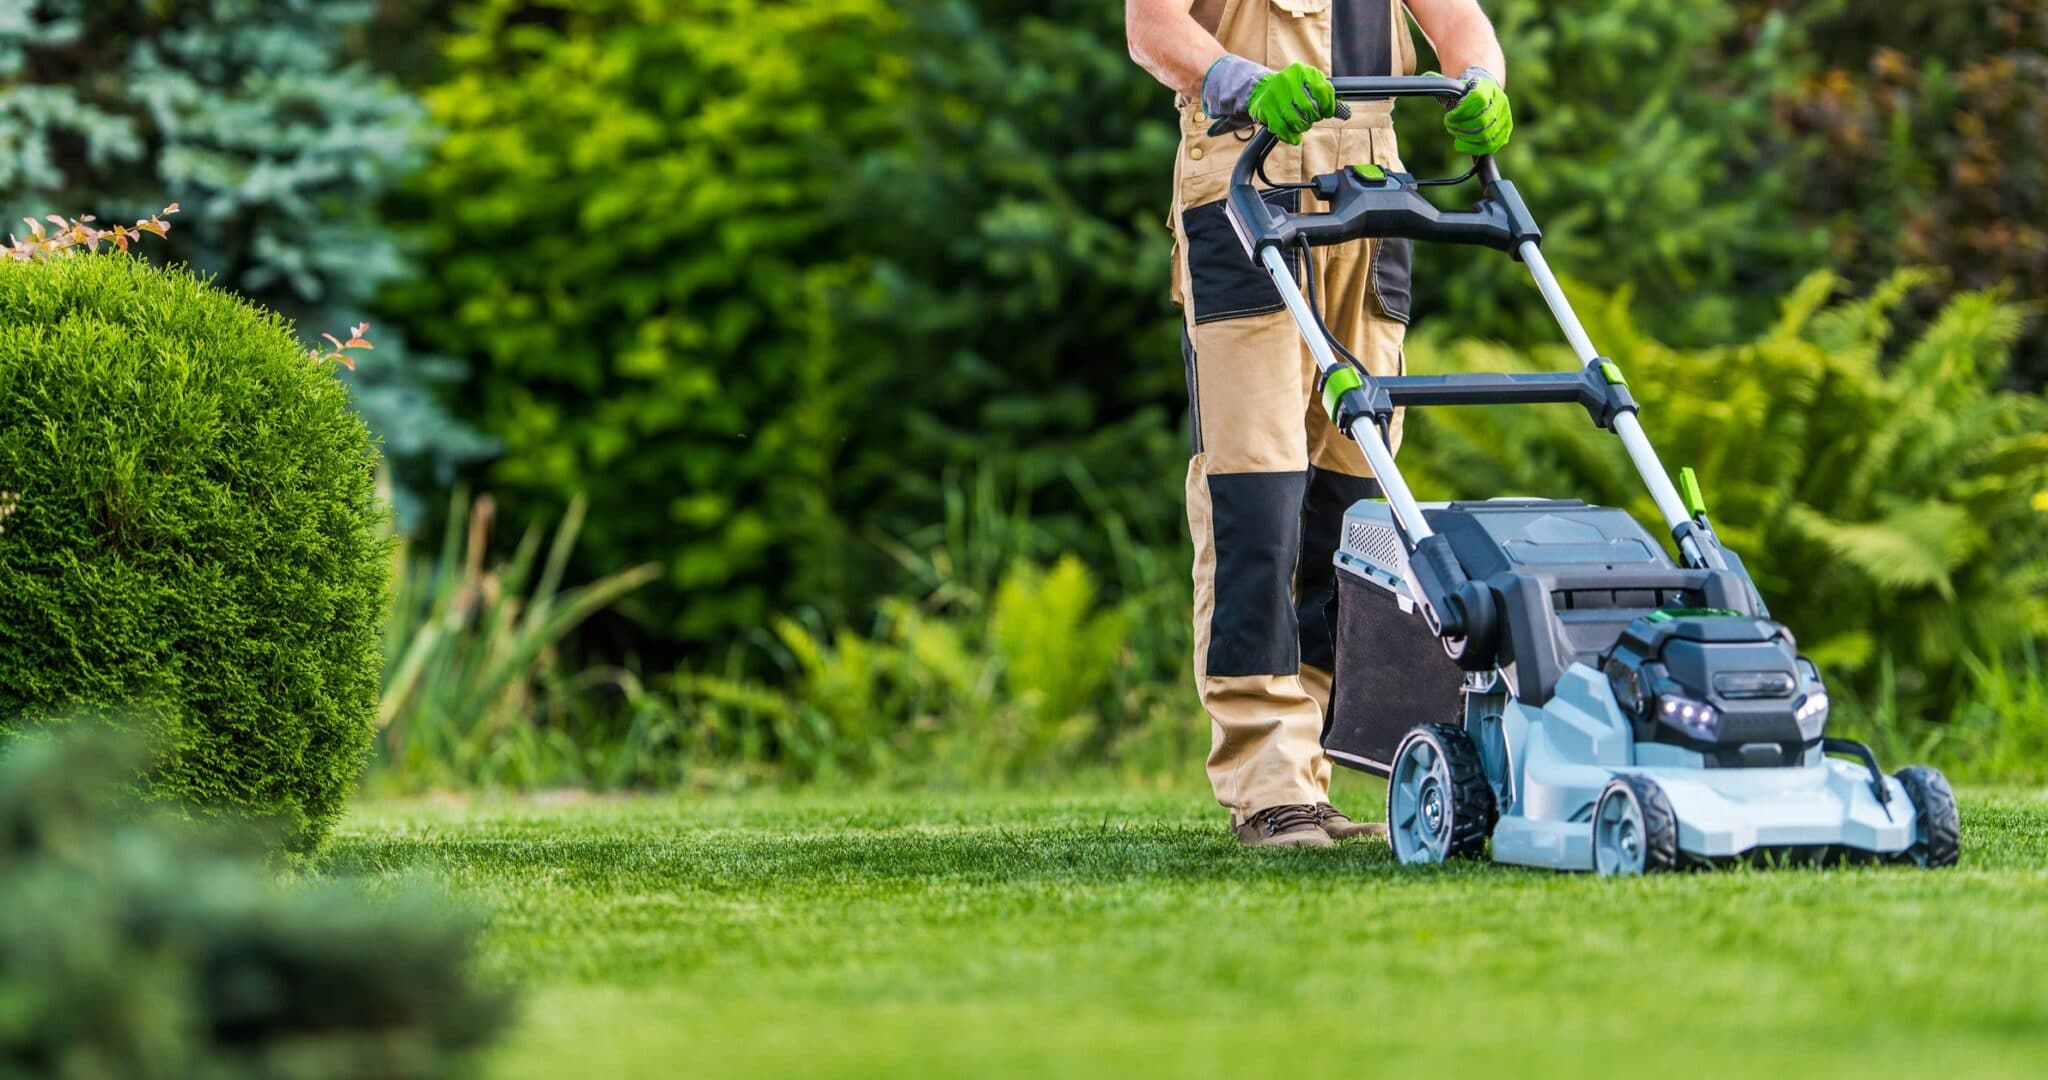 Budget-friendly lawn and garden equipment